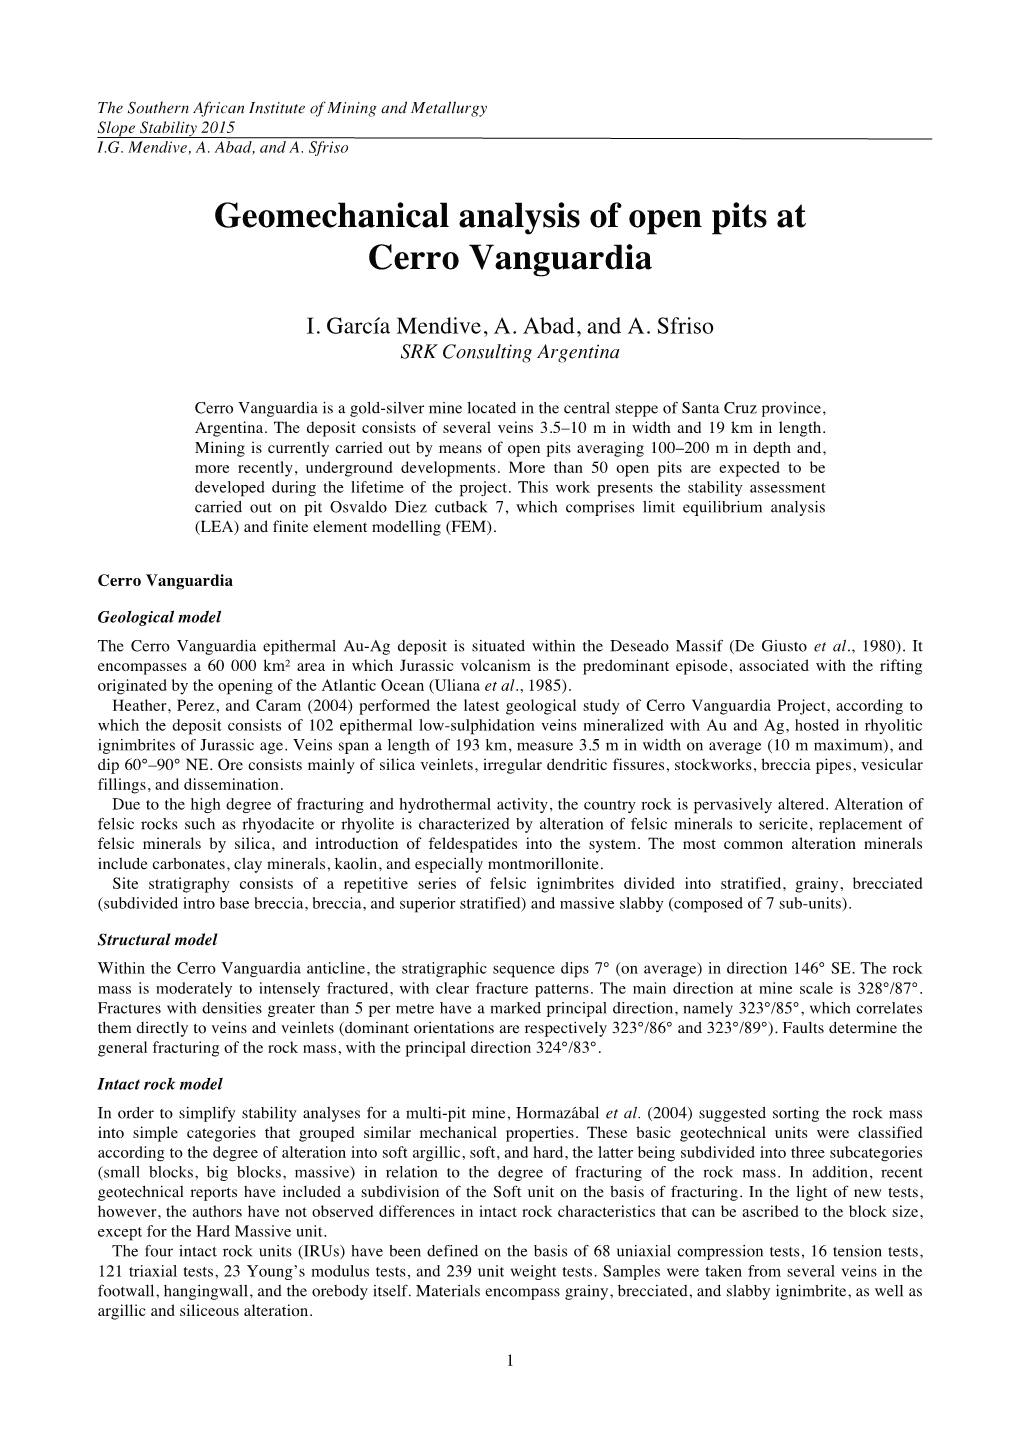 Geomechanical Analysis of Open Pits at Cerro Vanguardia